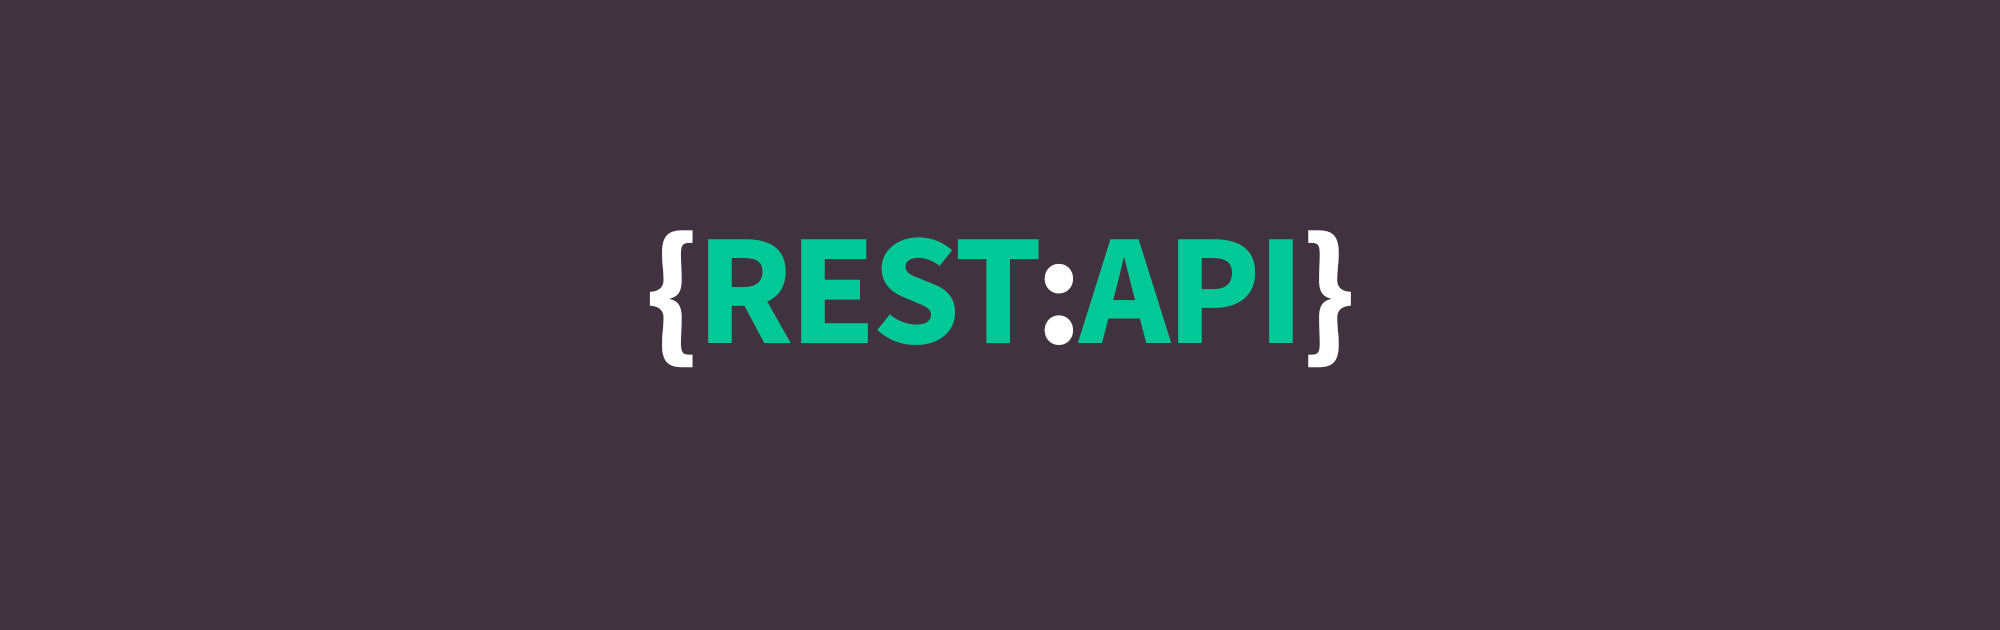 REST API Featured Image